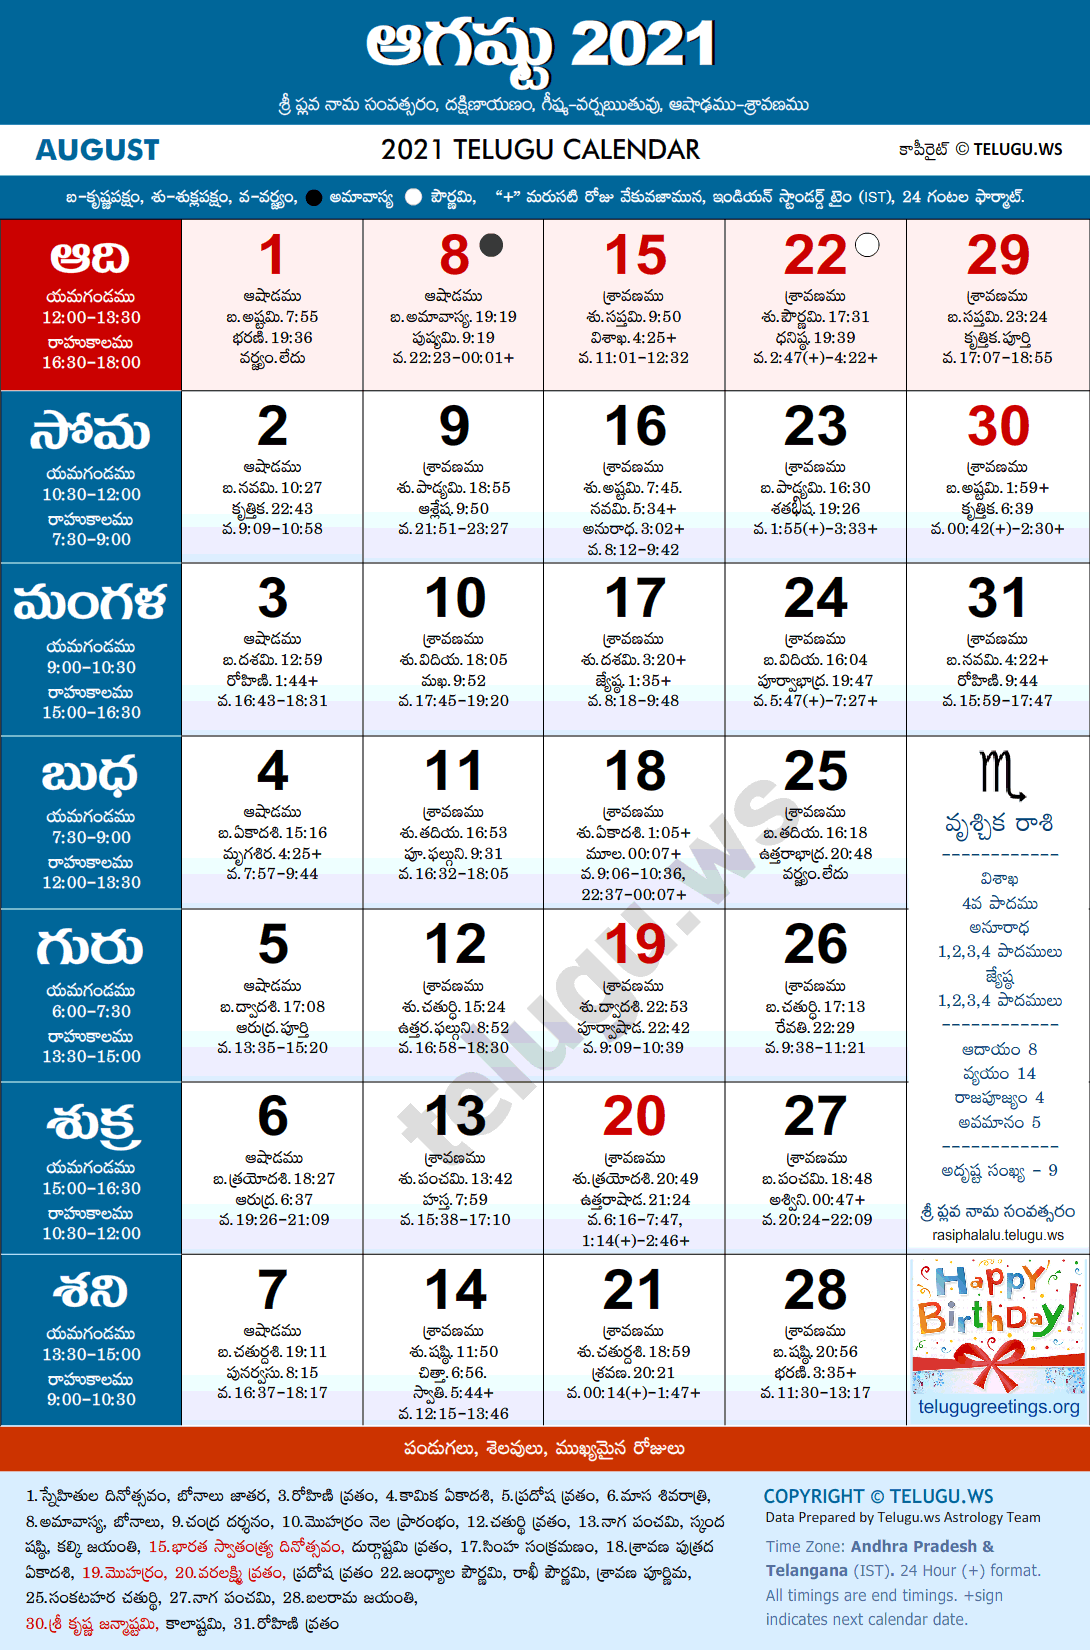 April 2021 Telugu Calendar : TELUGU Calendar (From April 2020 to March